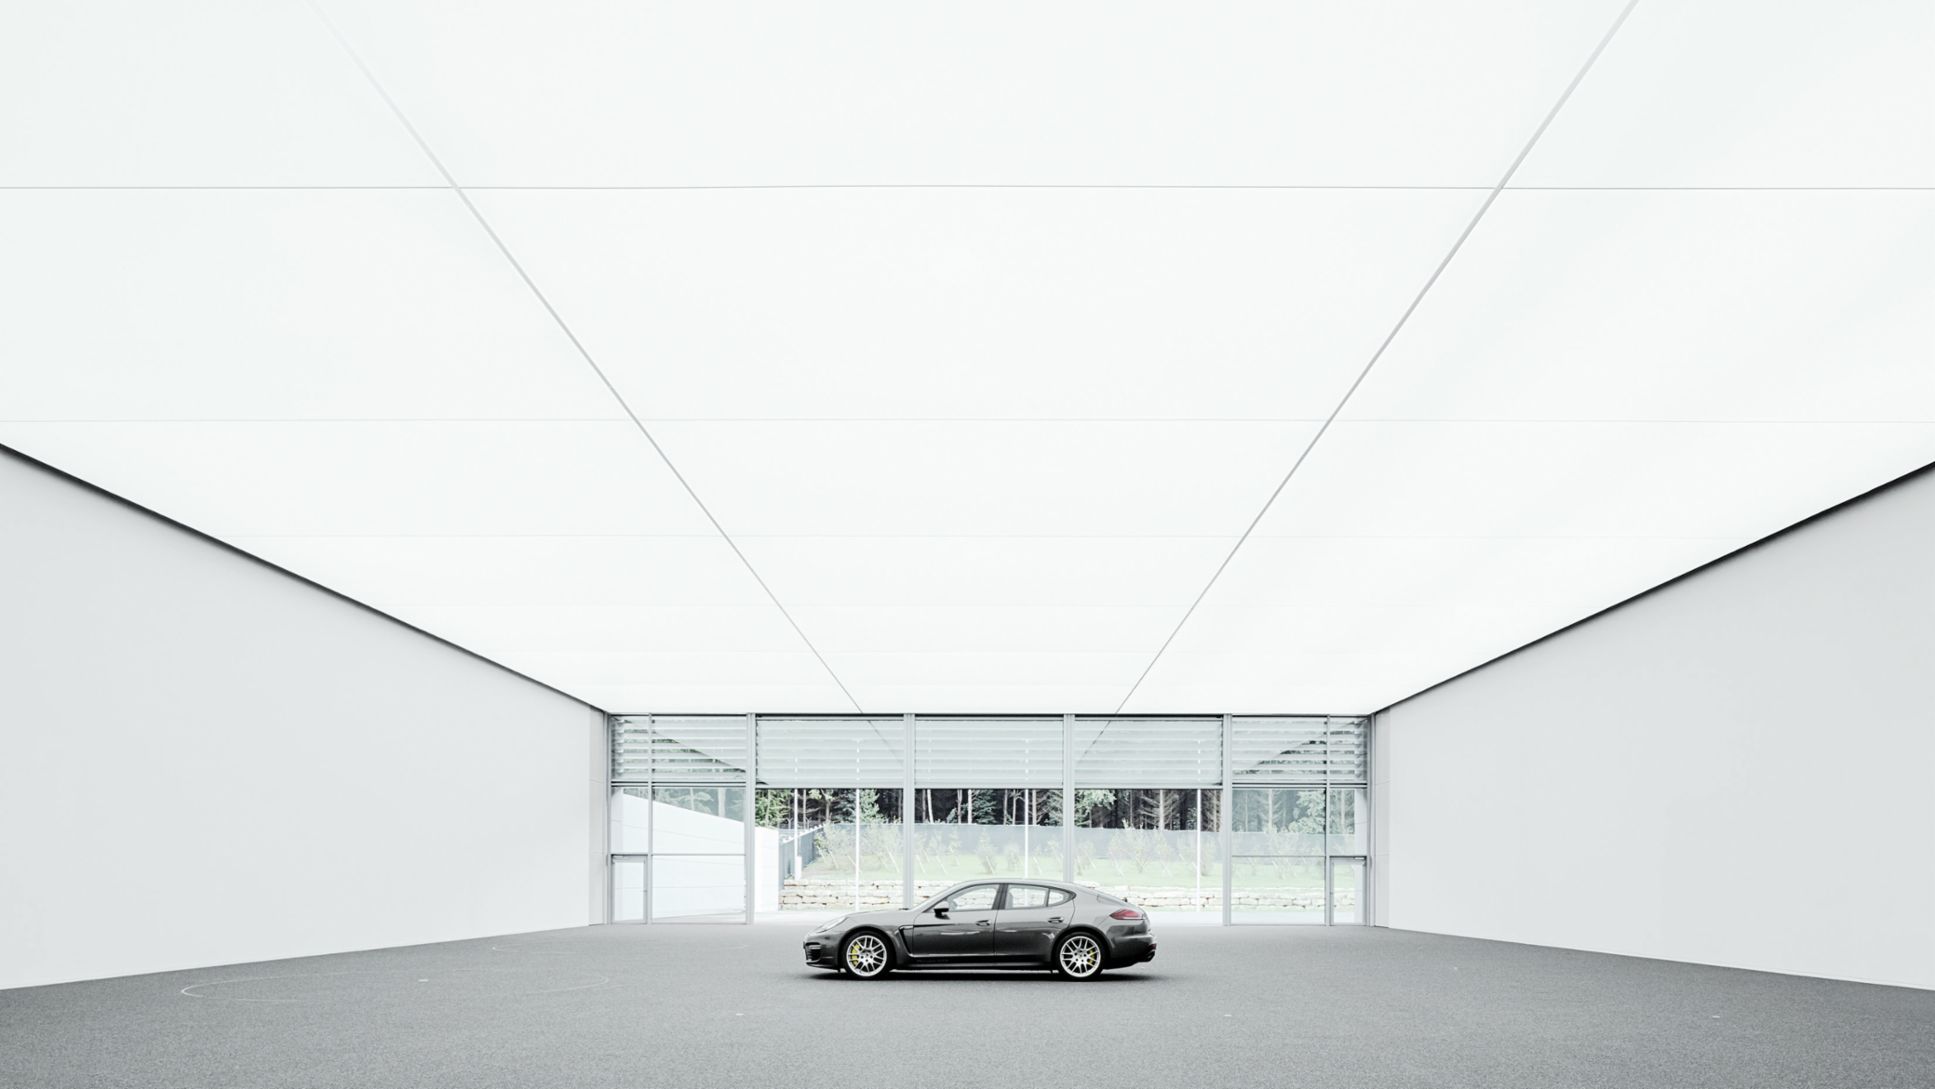 Panamera Turbo S Executive, Entwicklungszentrum, Weissach, 2014, Porsche AG